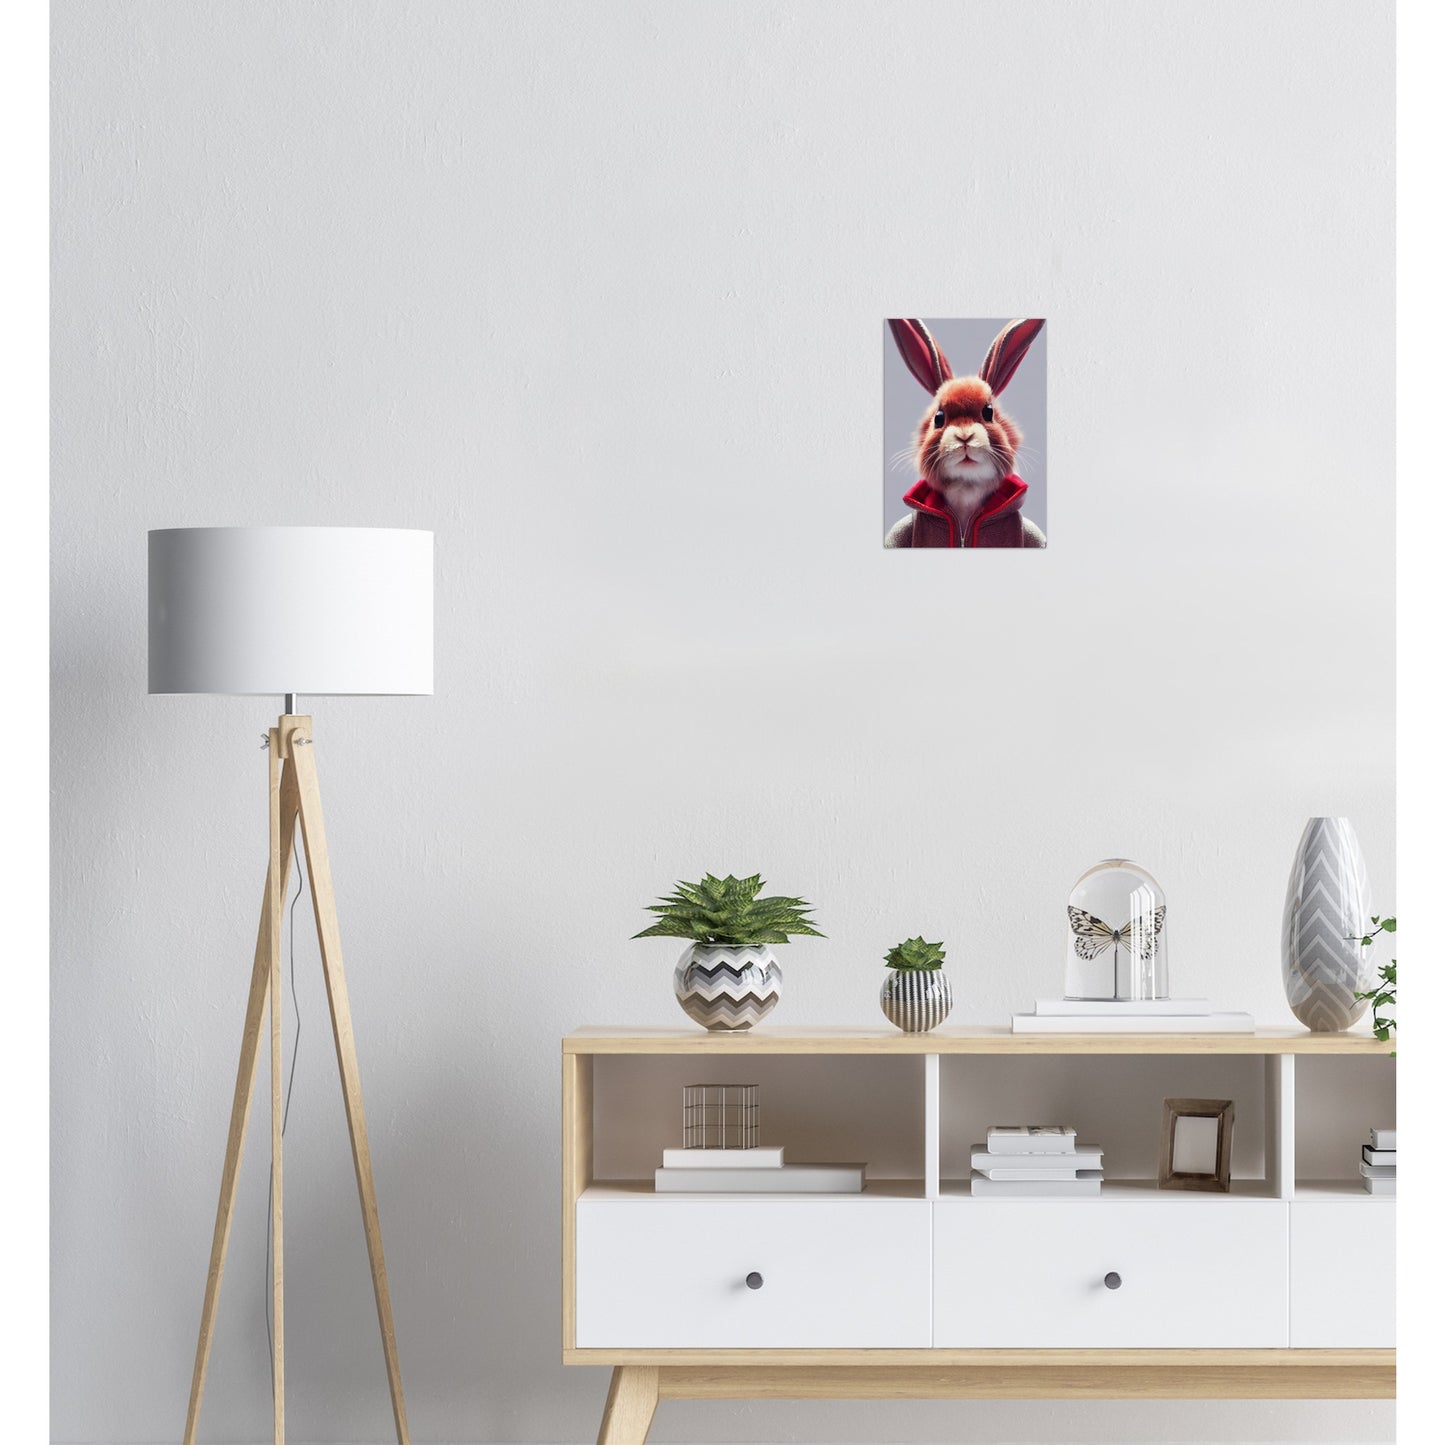 Poster in Museumsqualität - Bunny in grey red tracksuit - "Julius" - personalized mug - customized mug - Cute rabbit - Marke:- Pixelboys - Brand - Art Prints - Marke - Wandkunst - Papierstärke: 250g/qm - Wall Art - Bunny crey - Skater Betty - Hasen Gang - Original - Künstler:Pixelboys - Poster with frame - Office Poster - Trend - Wandschmuck - Atelier USA - 